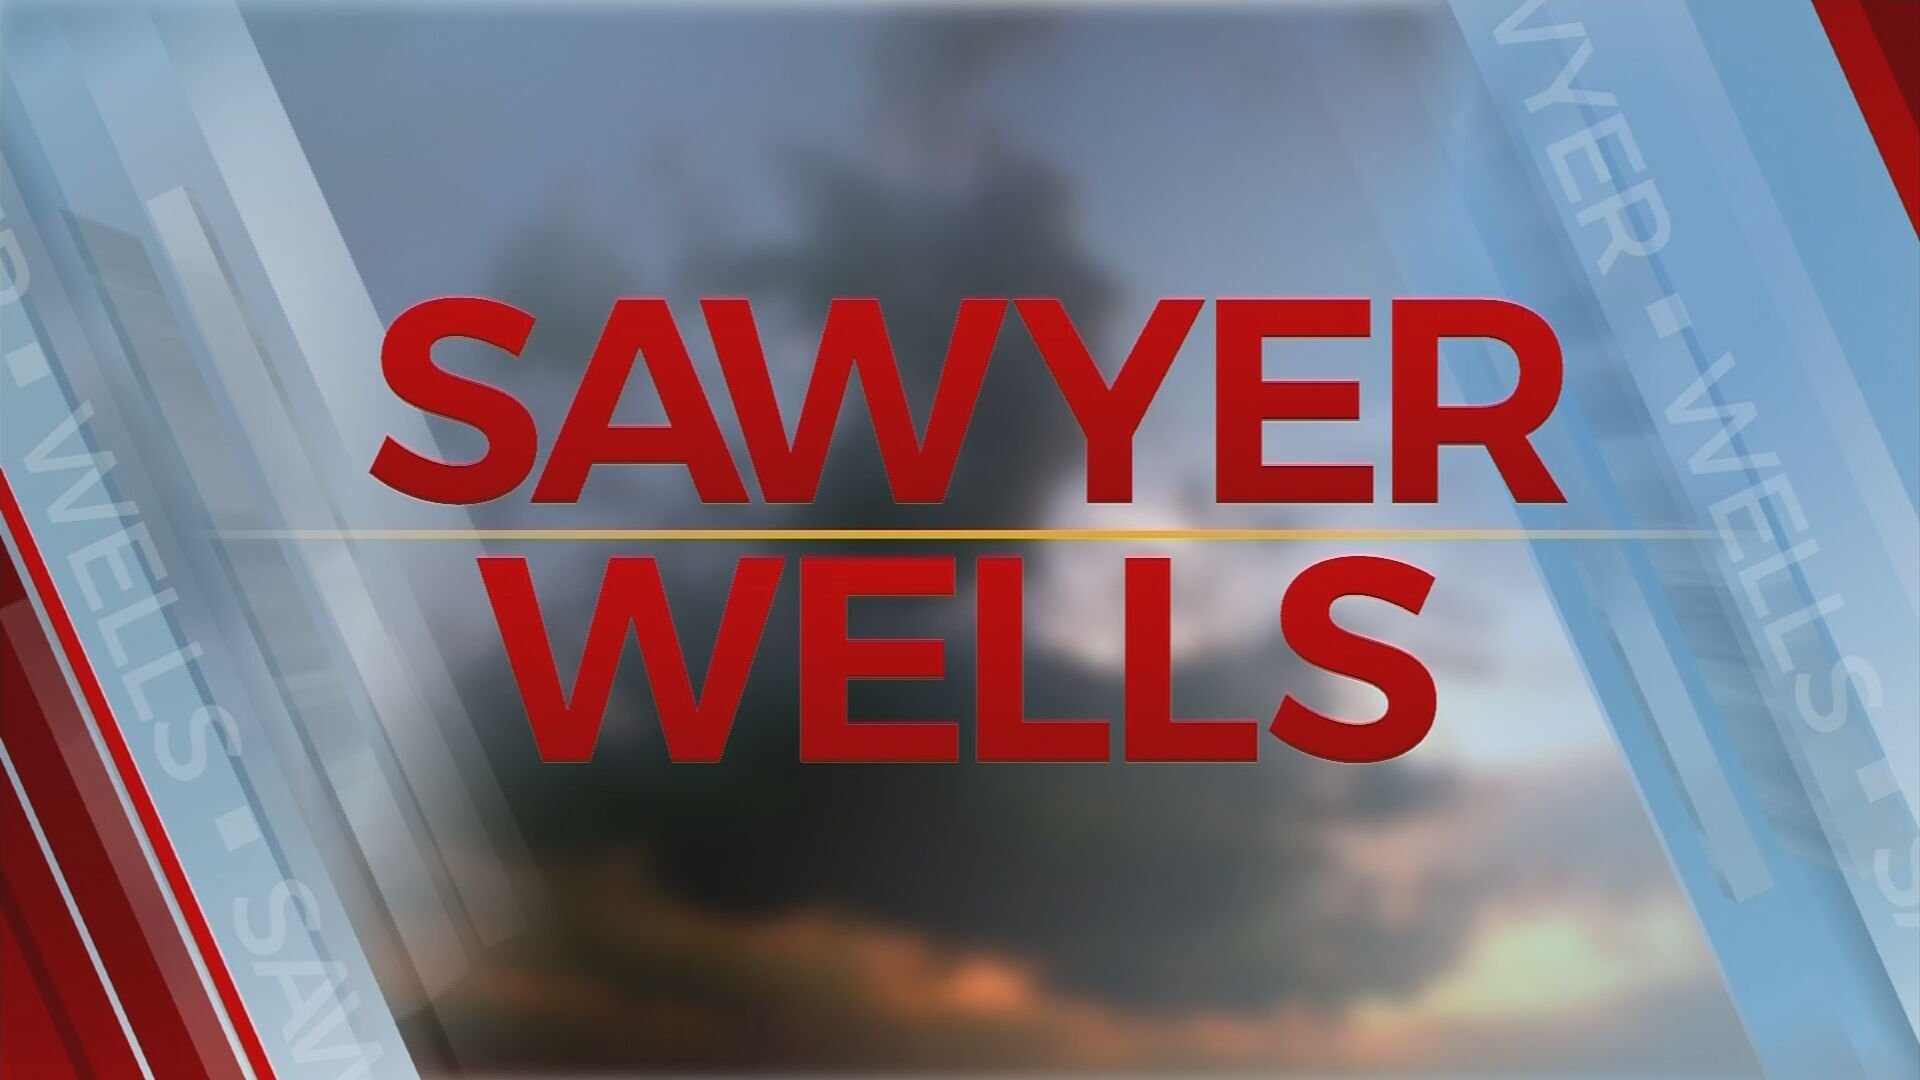 Saturday Forecast With Sawyer Wells